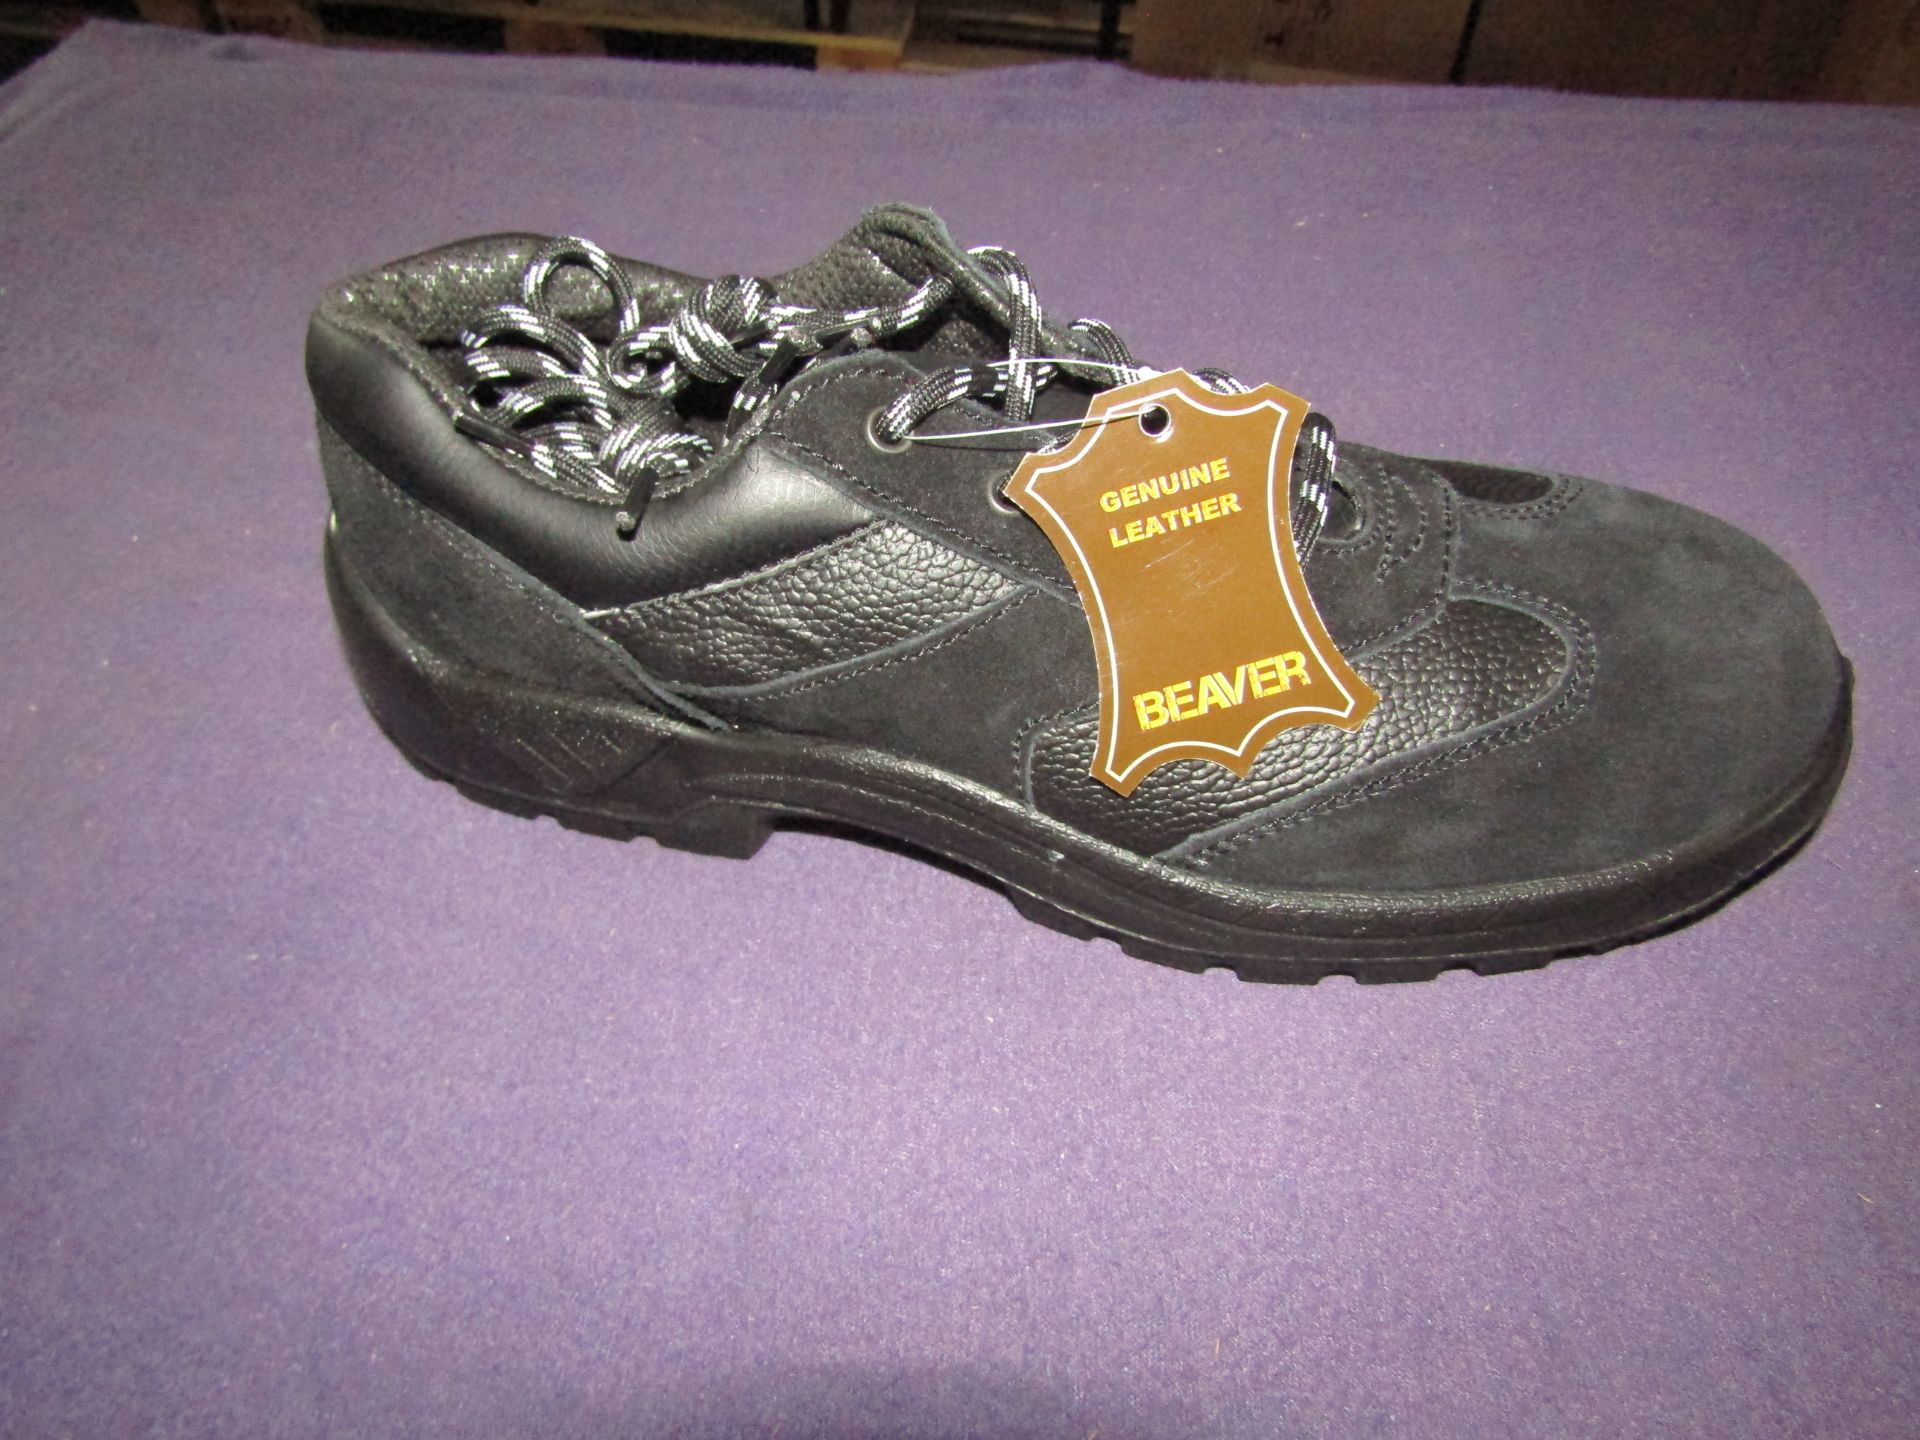 Beaver - Black Steel-toe Cap Shoes - Size 10 - Unused & Boxed.